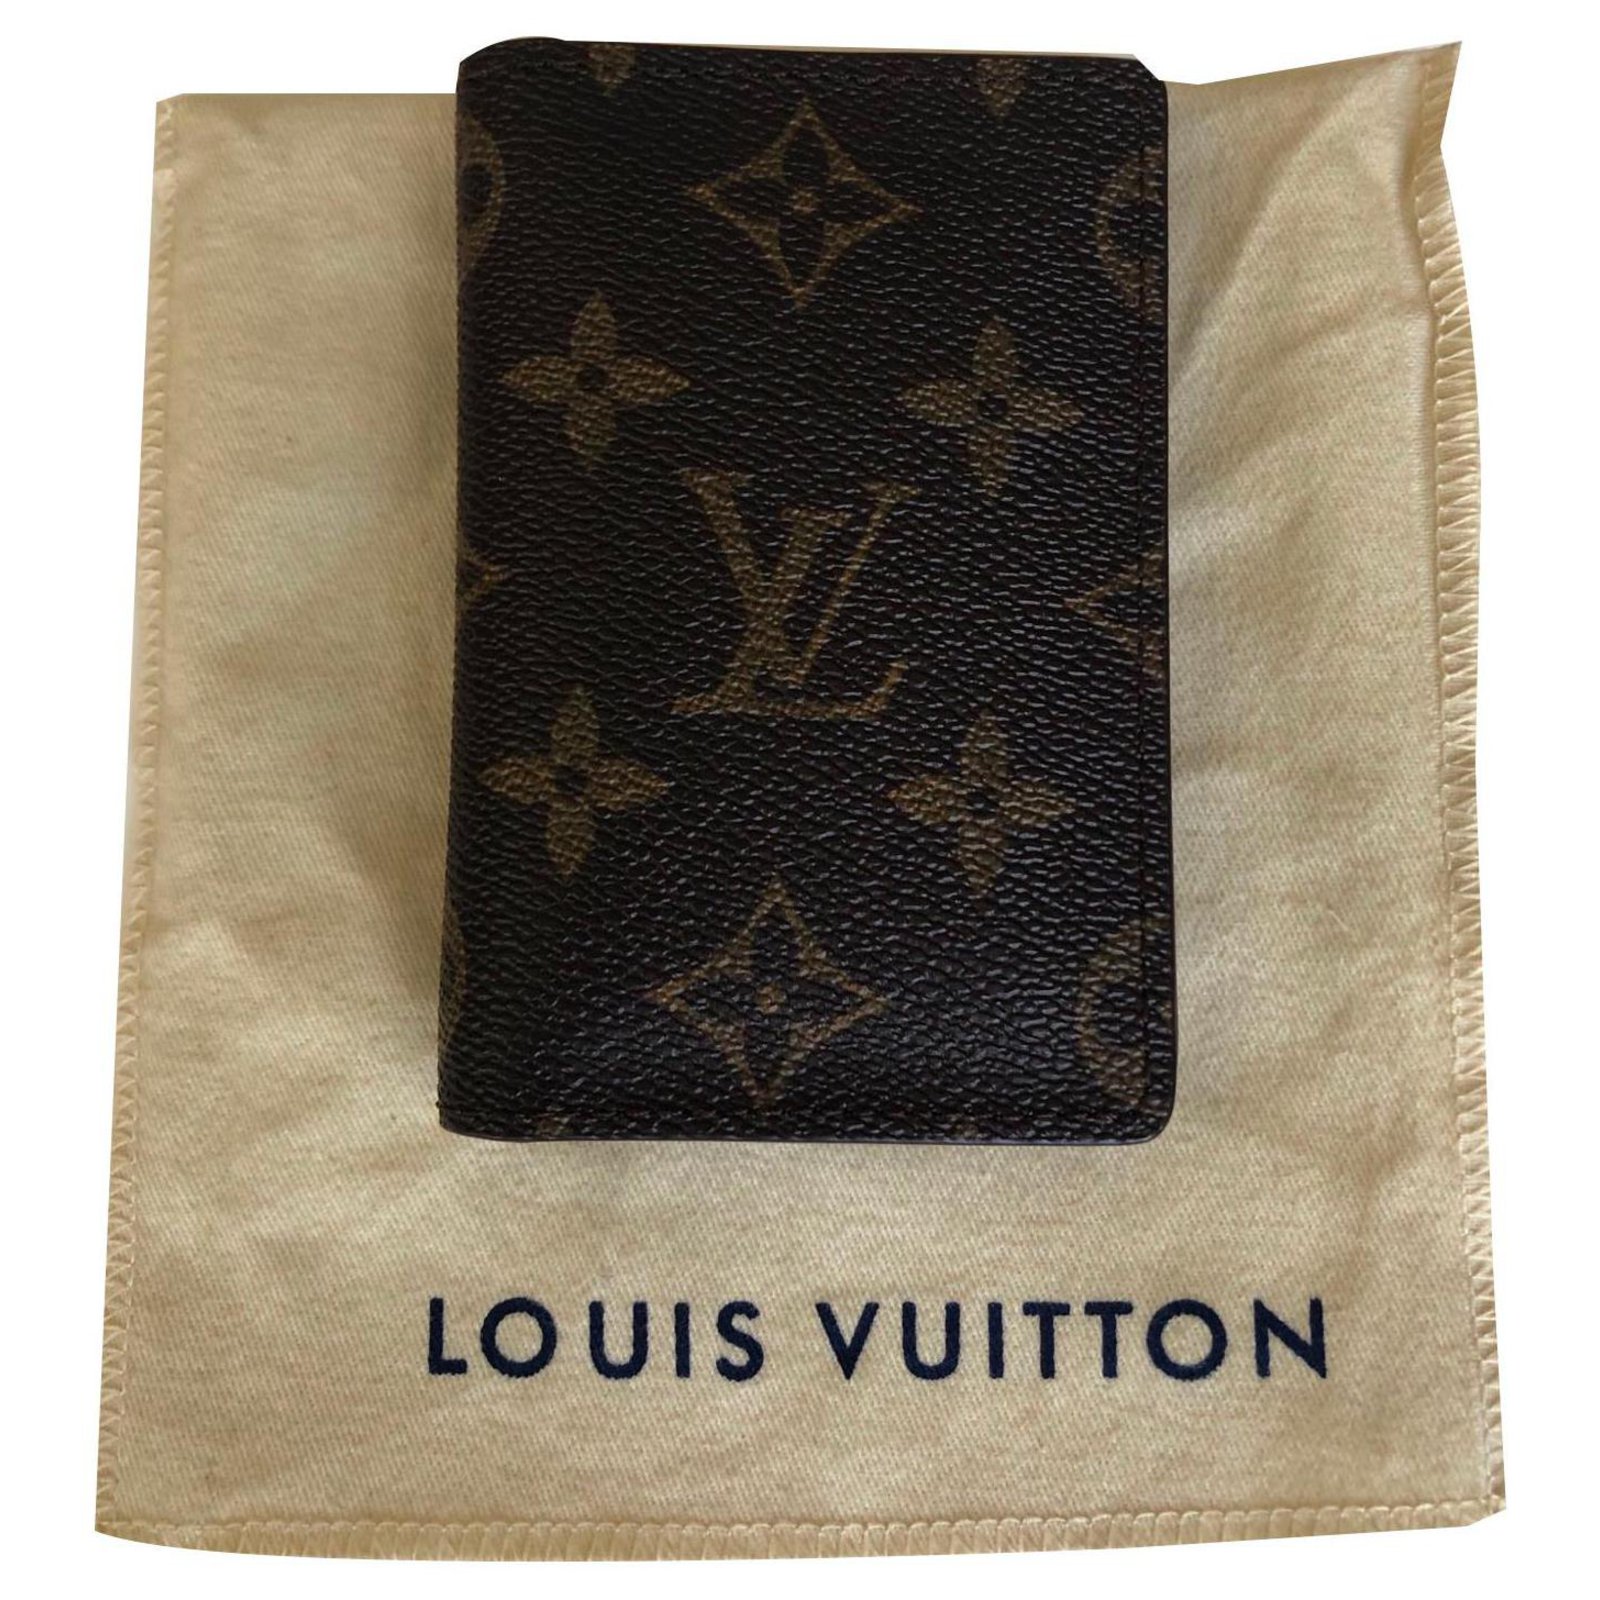 Louis Vuitton Pocket Organizer, Brown, One Size